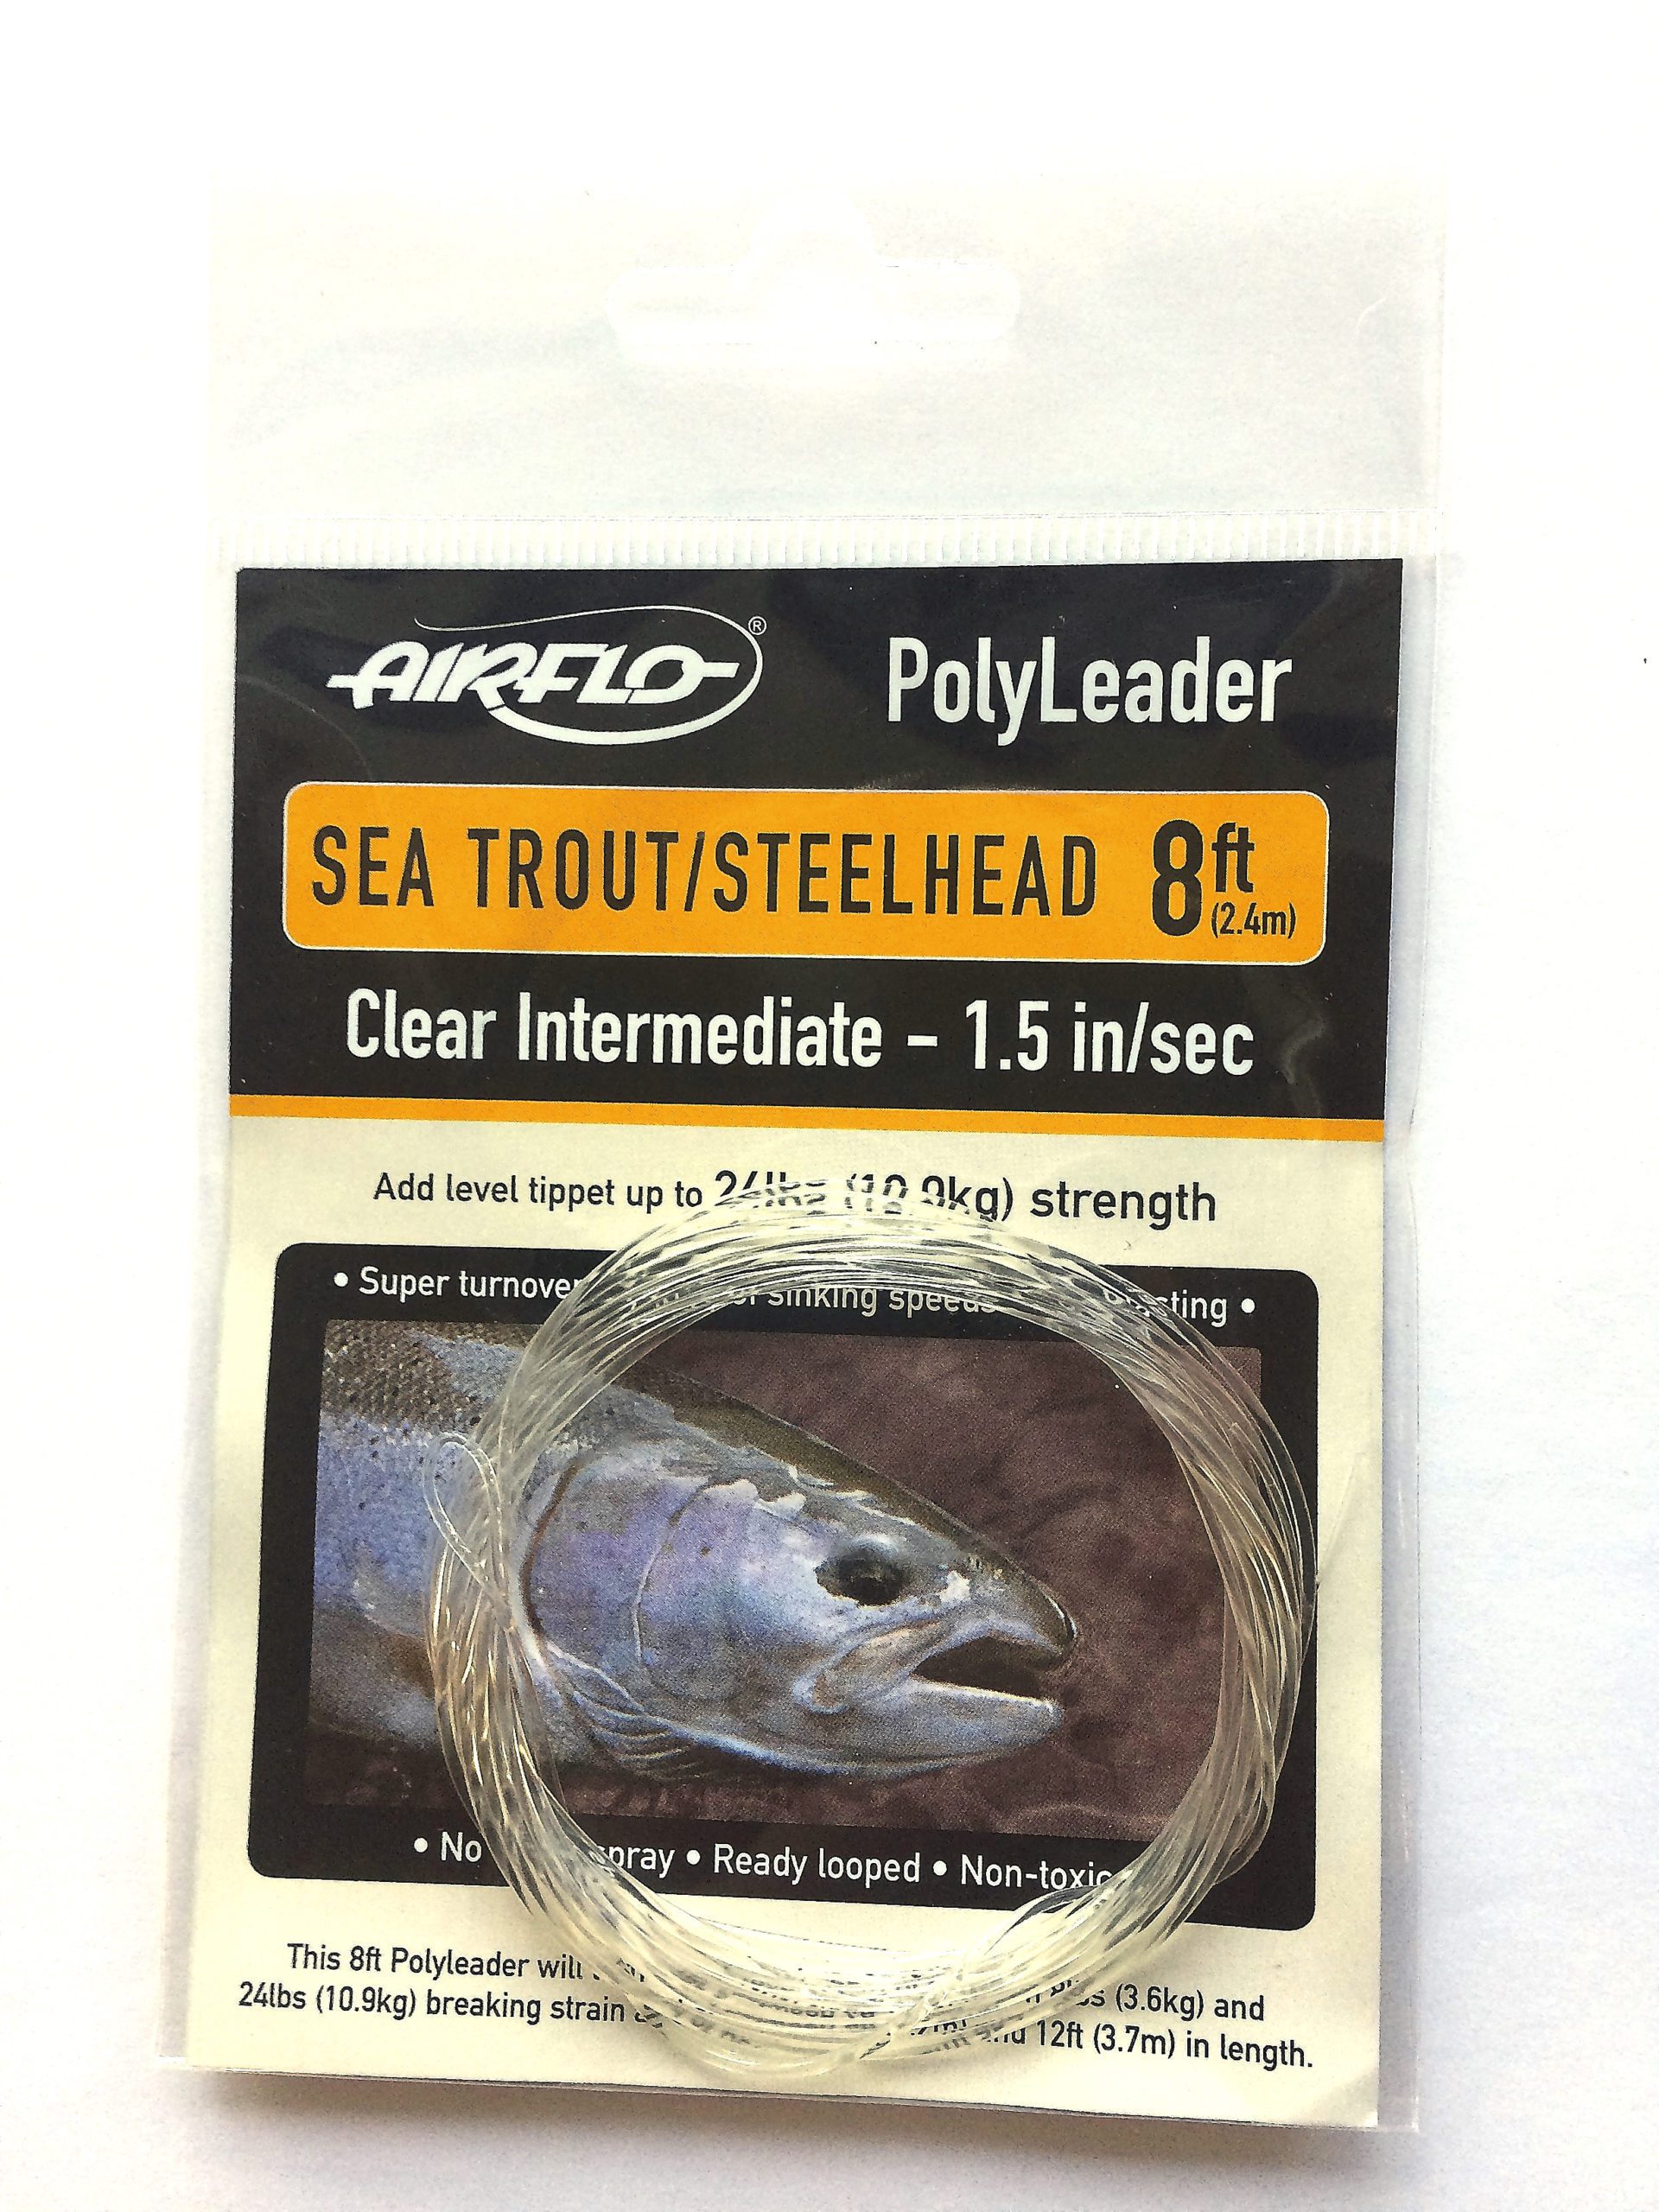 Airflo polyleader trout:steelhead clear intermidate 1